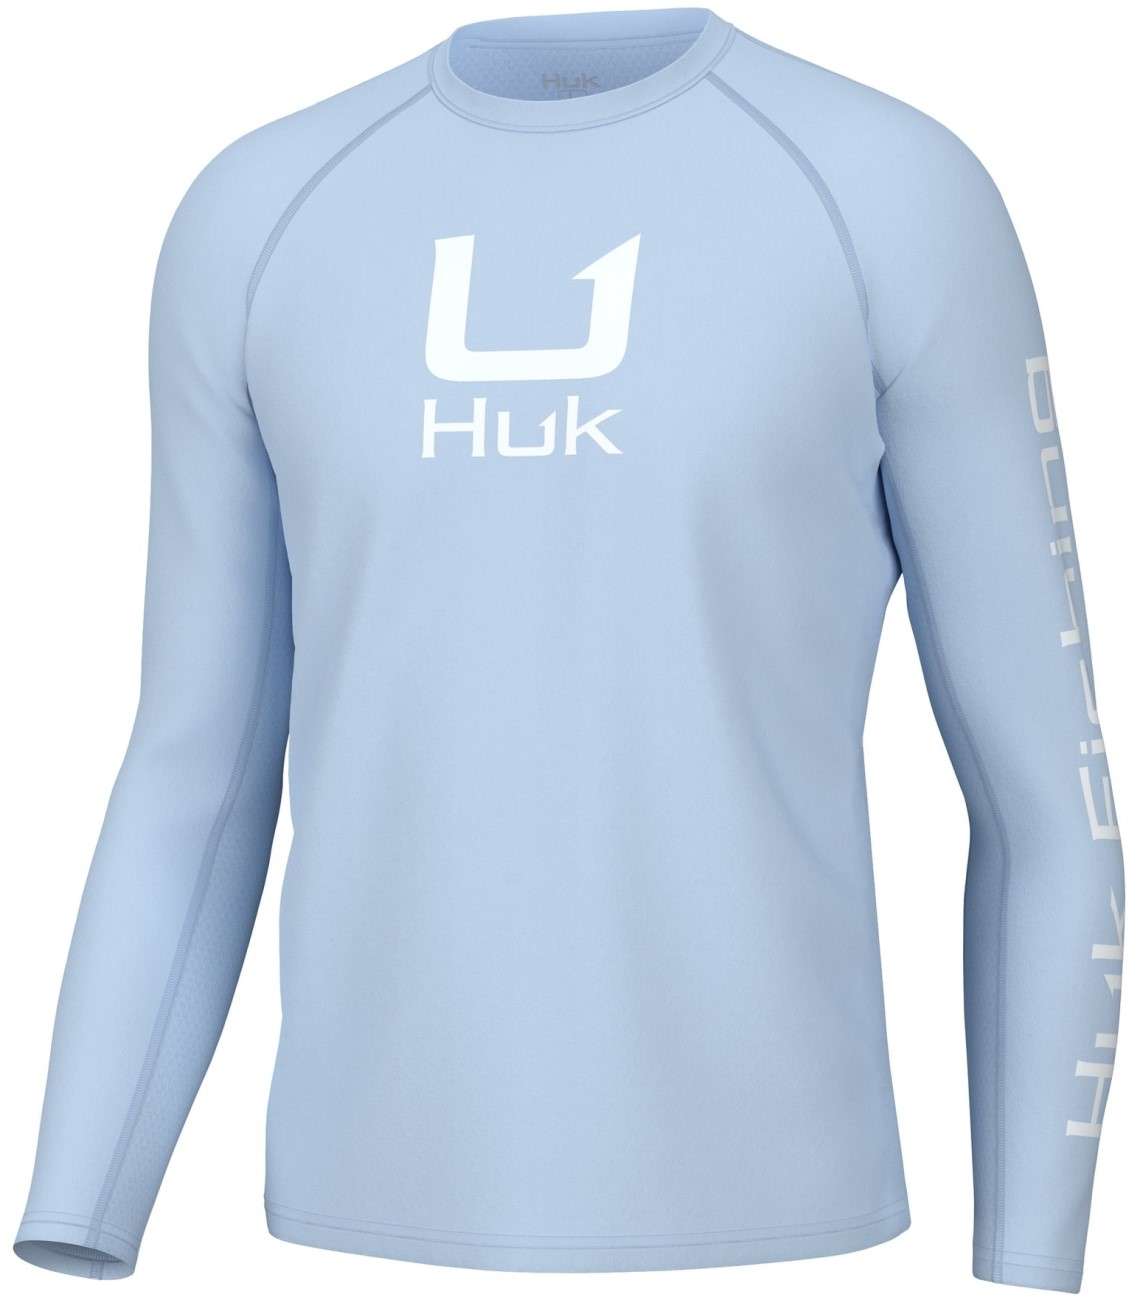 Huk Fishing Shirt, Men's Large, Huk Pursuit Top Water Bass LS